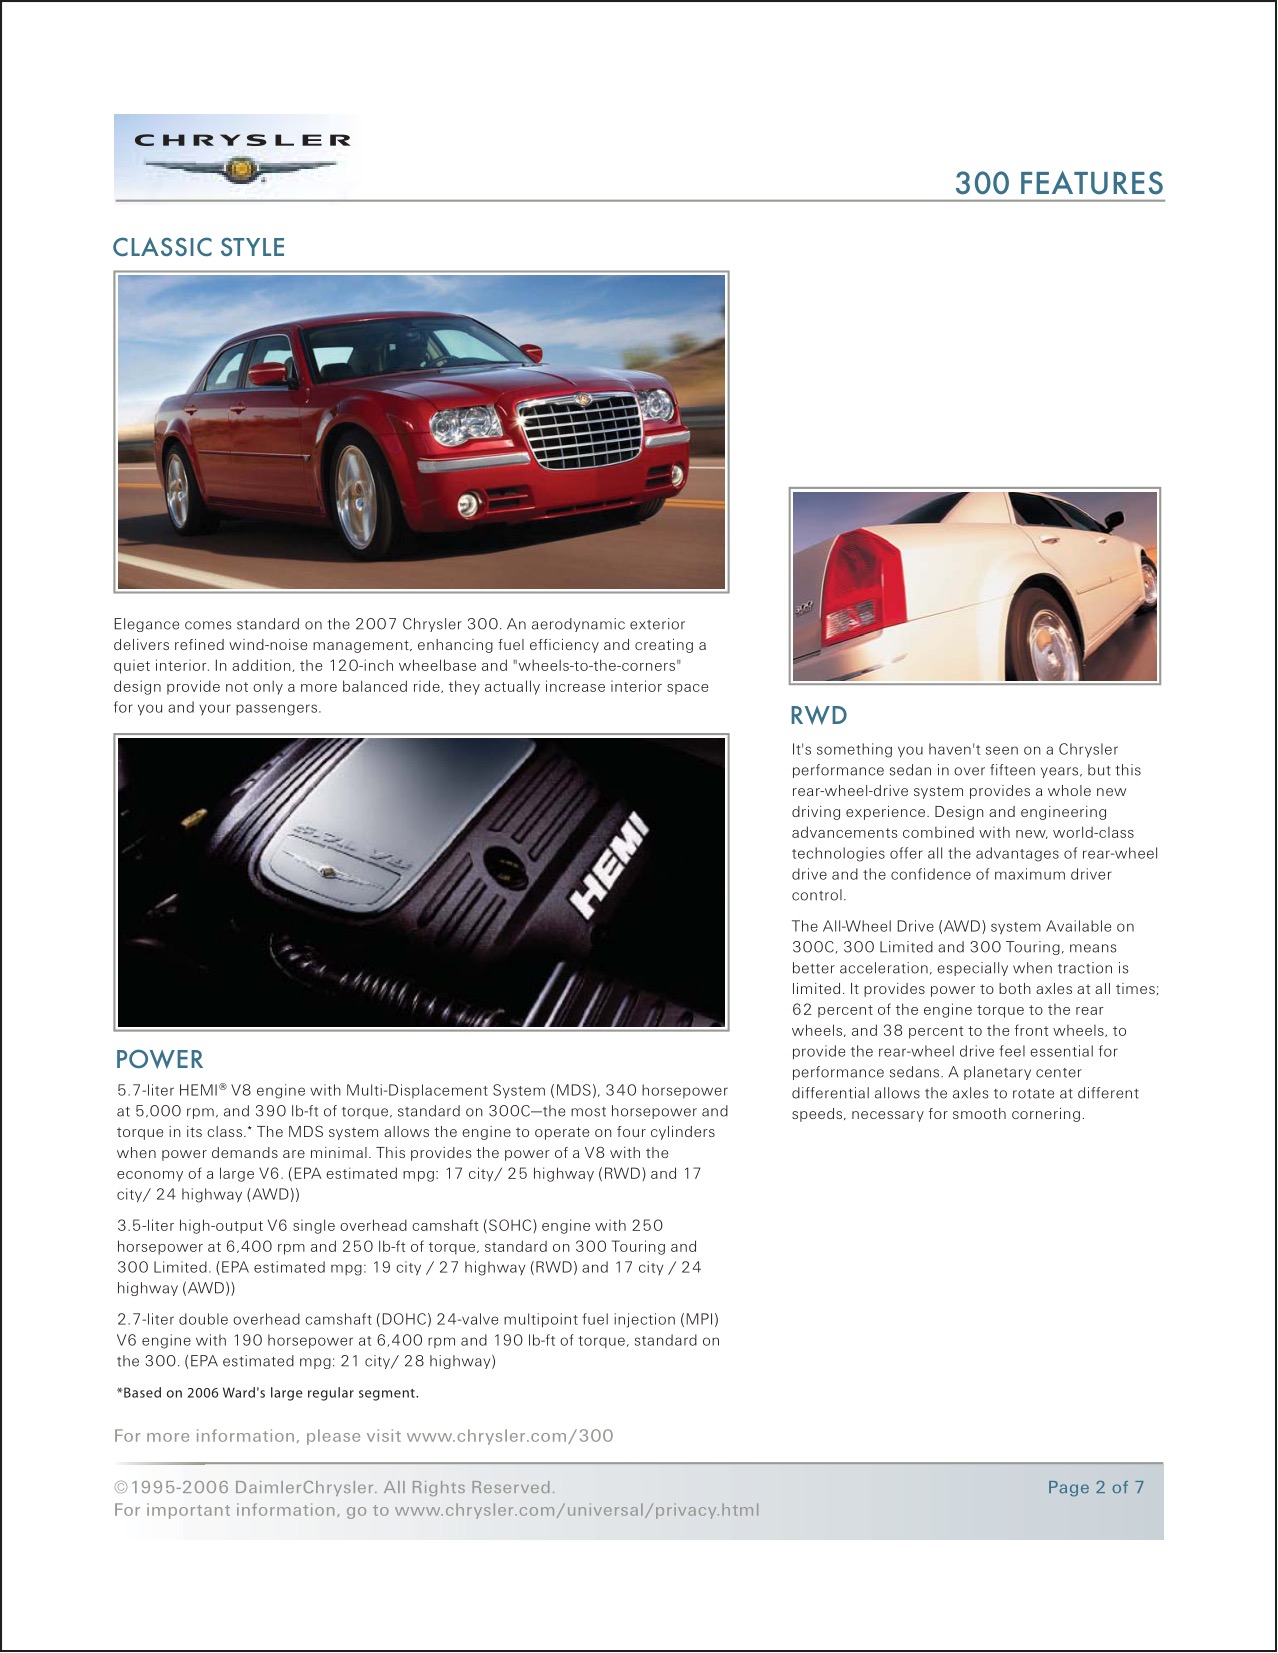 2007 Chrysler 300 Brochure Page 2